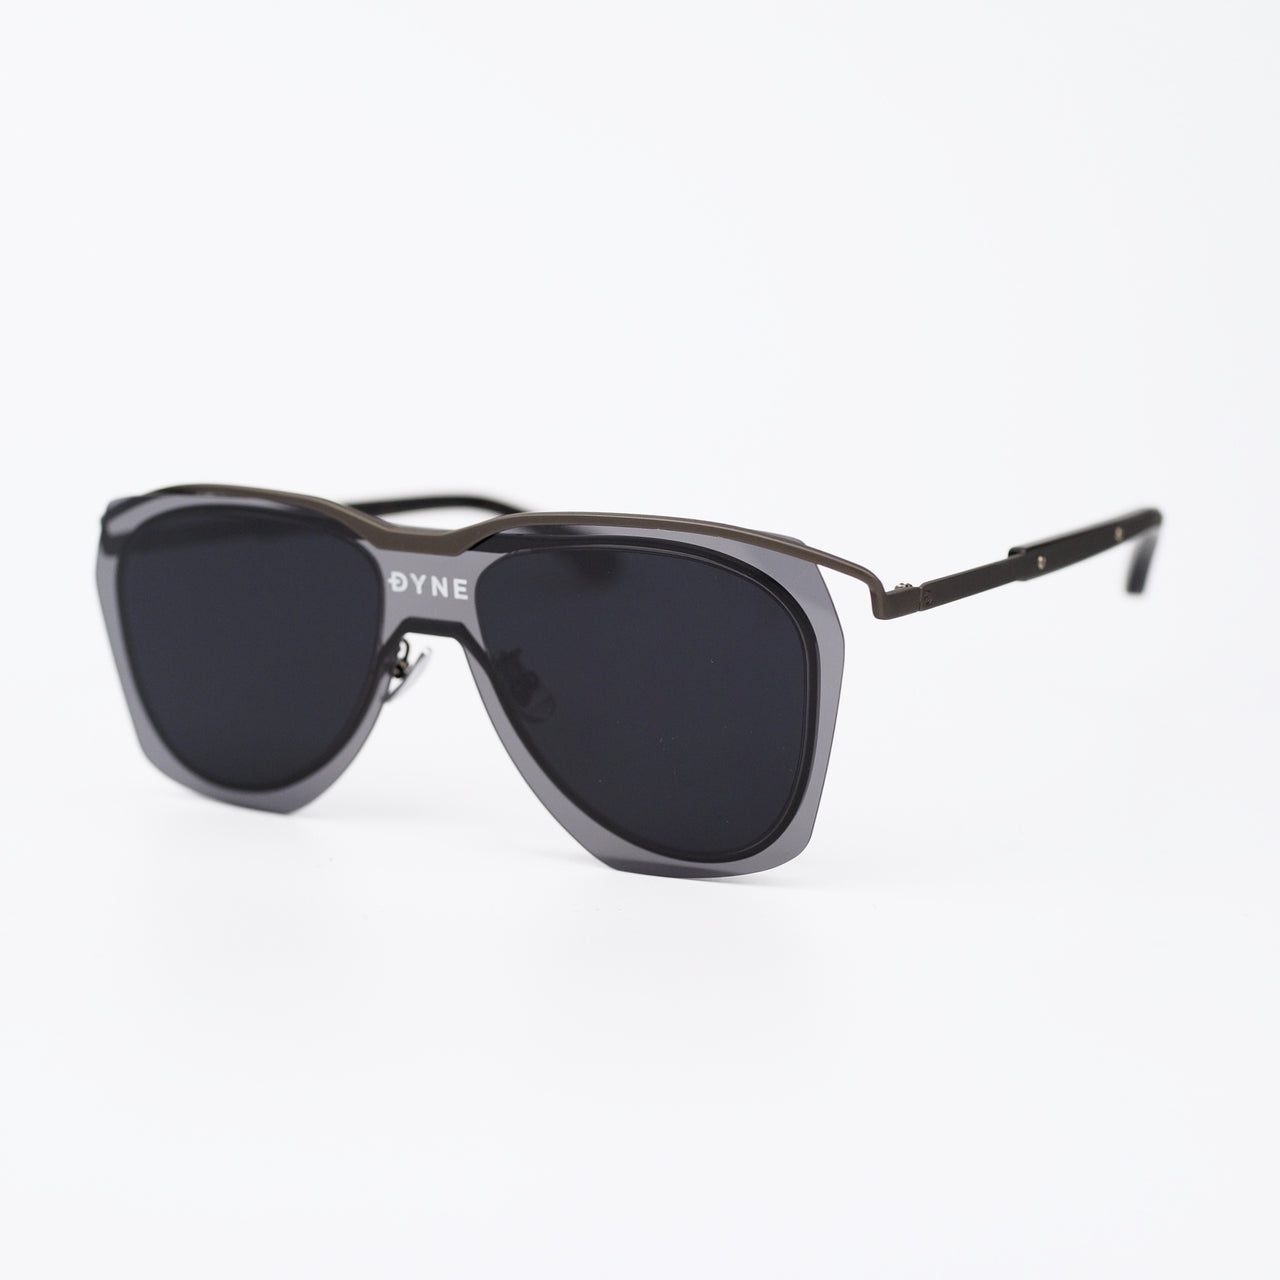 Matt Gray Coated Metal Frame Sunglasses with Black Layered Lens